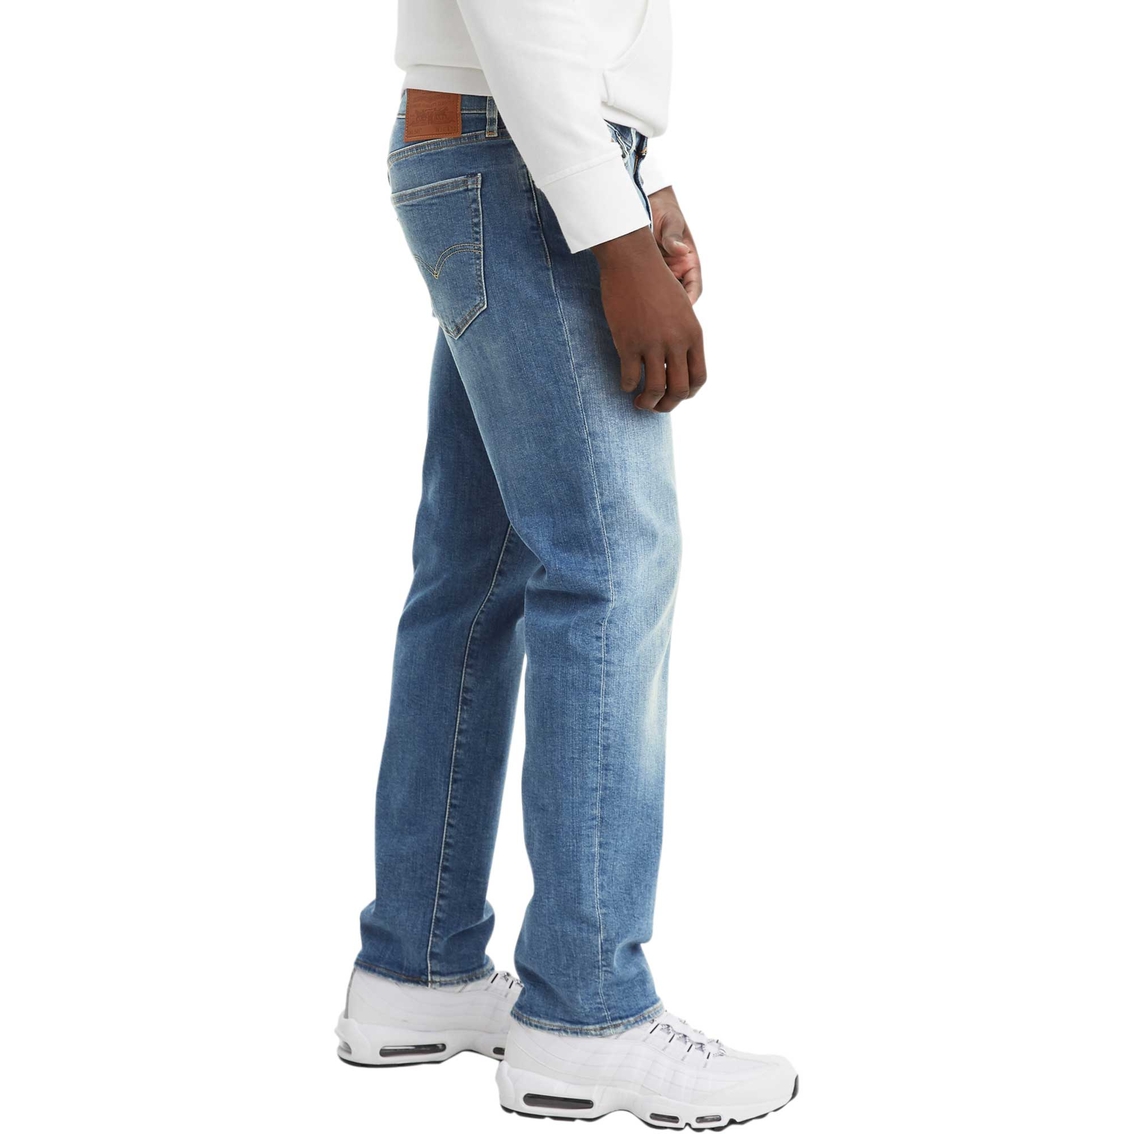 Levi's 541 Athletic Taper Flex Jeans - Image 3 of 3